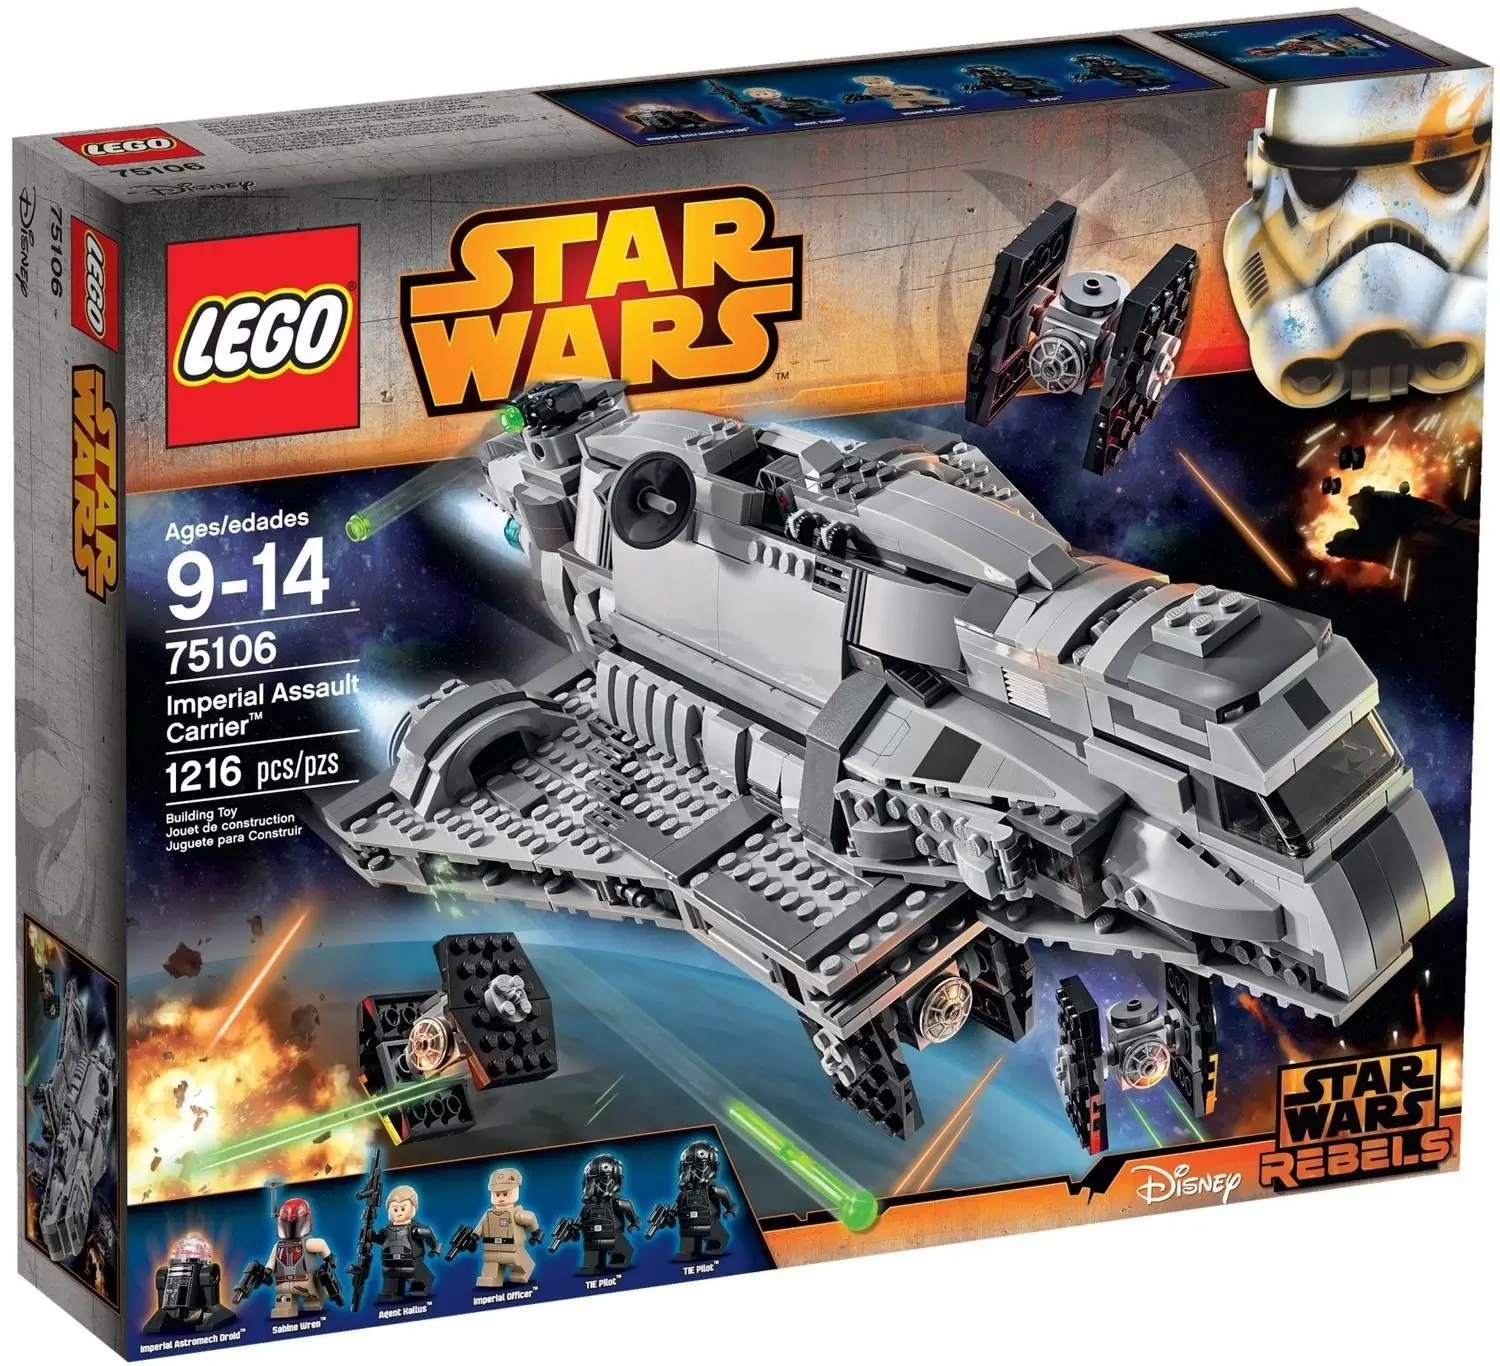 LEGO Star Wars - Imperial Assault Carrier